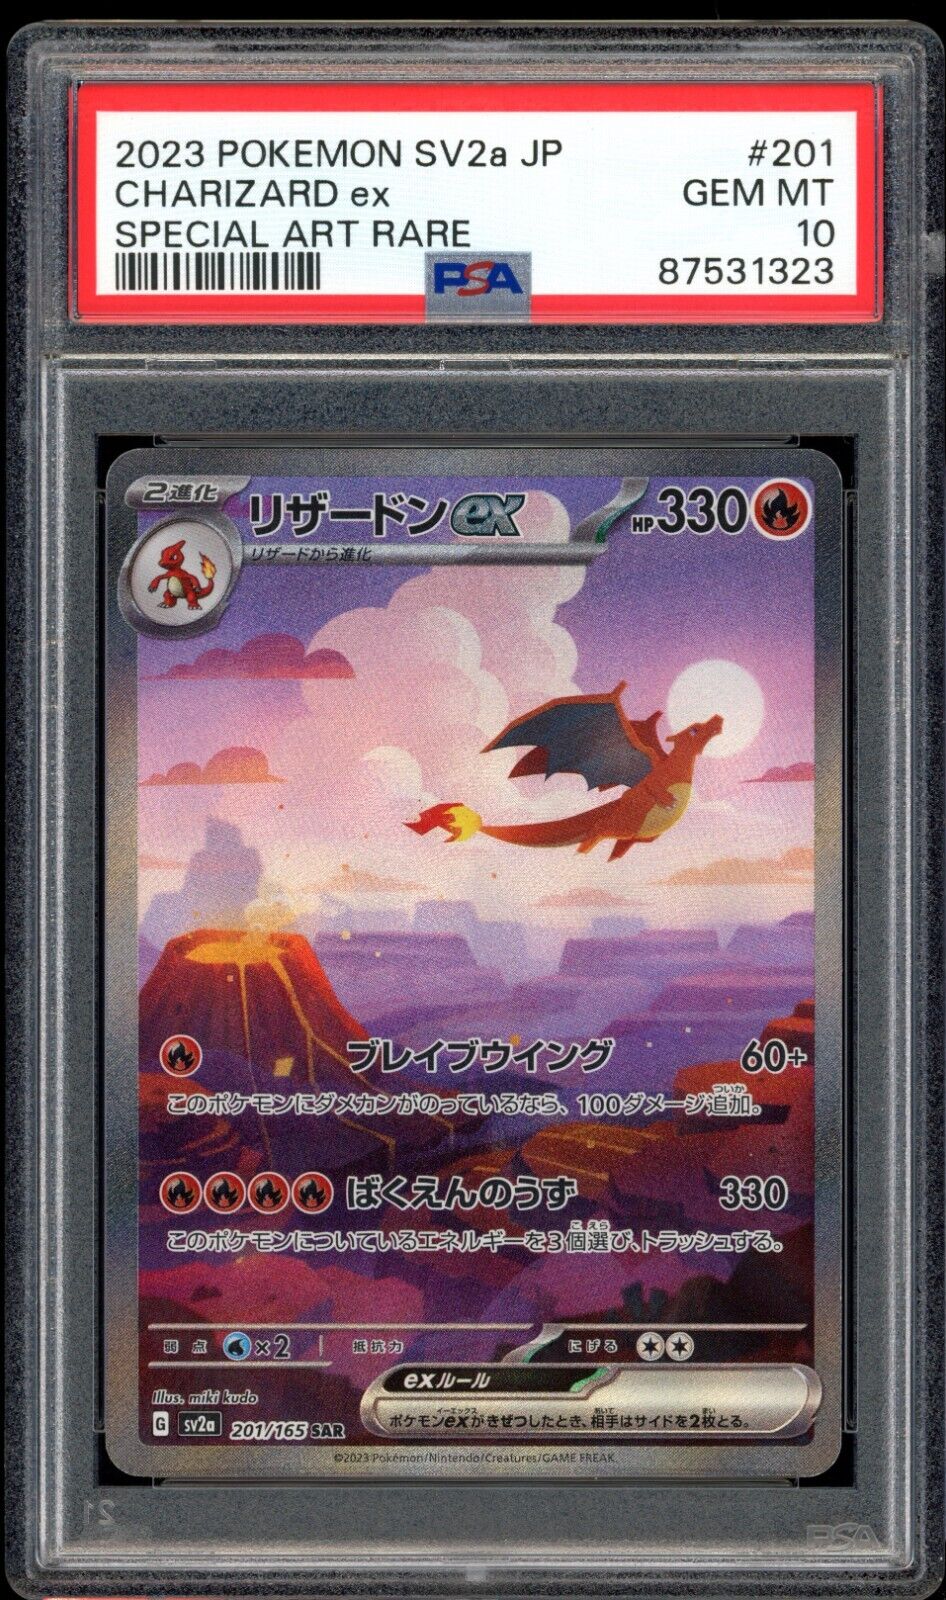 PSA 10 Charizard ex 201/165 Special Art Rare Pokemon Card 151 Japanese GEM MINT